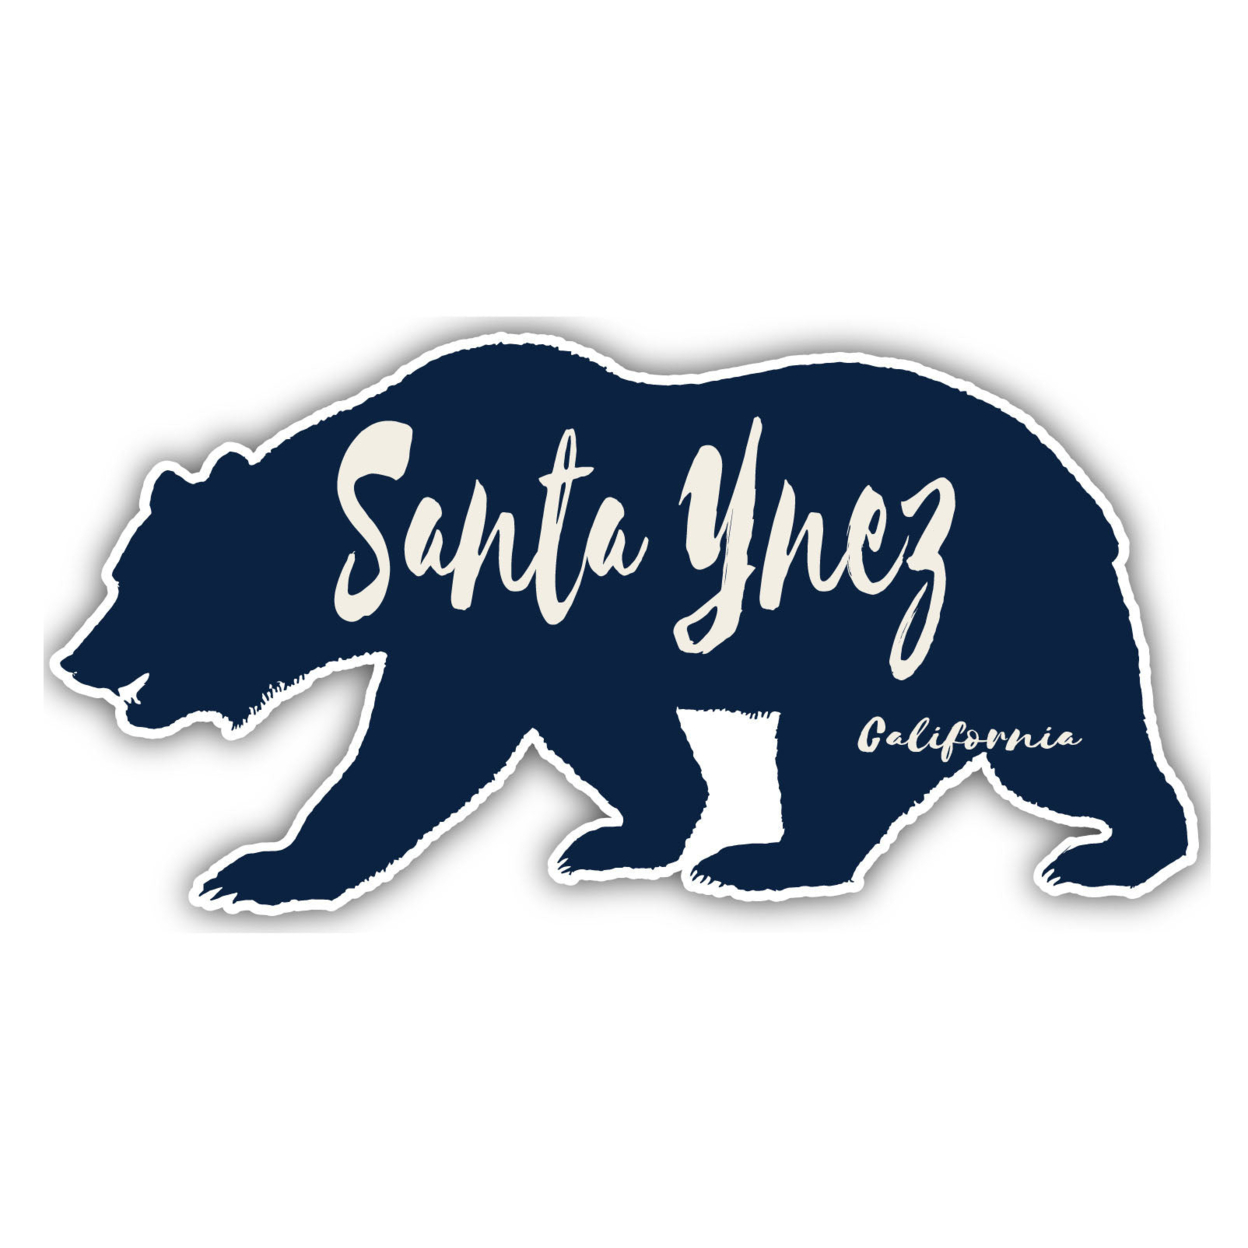 Santa Ynez California Souvenir Decorative Stickers (Choose Theme And Size) - Single Unit, 2-Inch, Camp Life